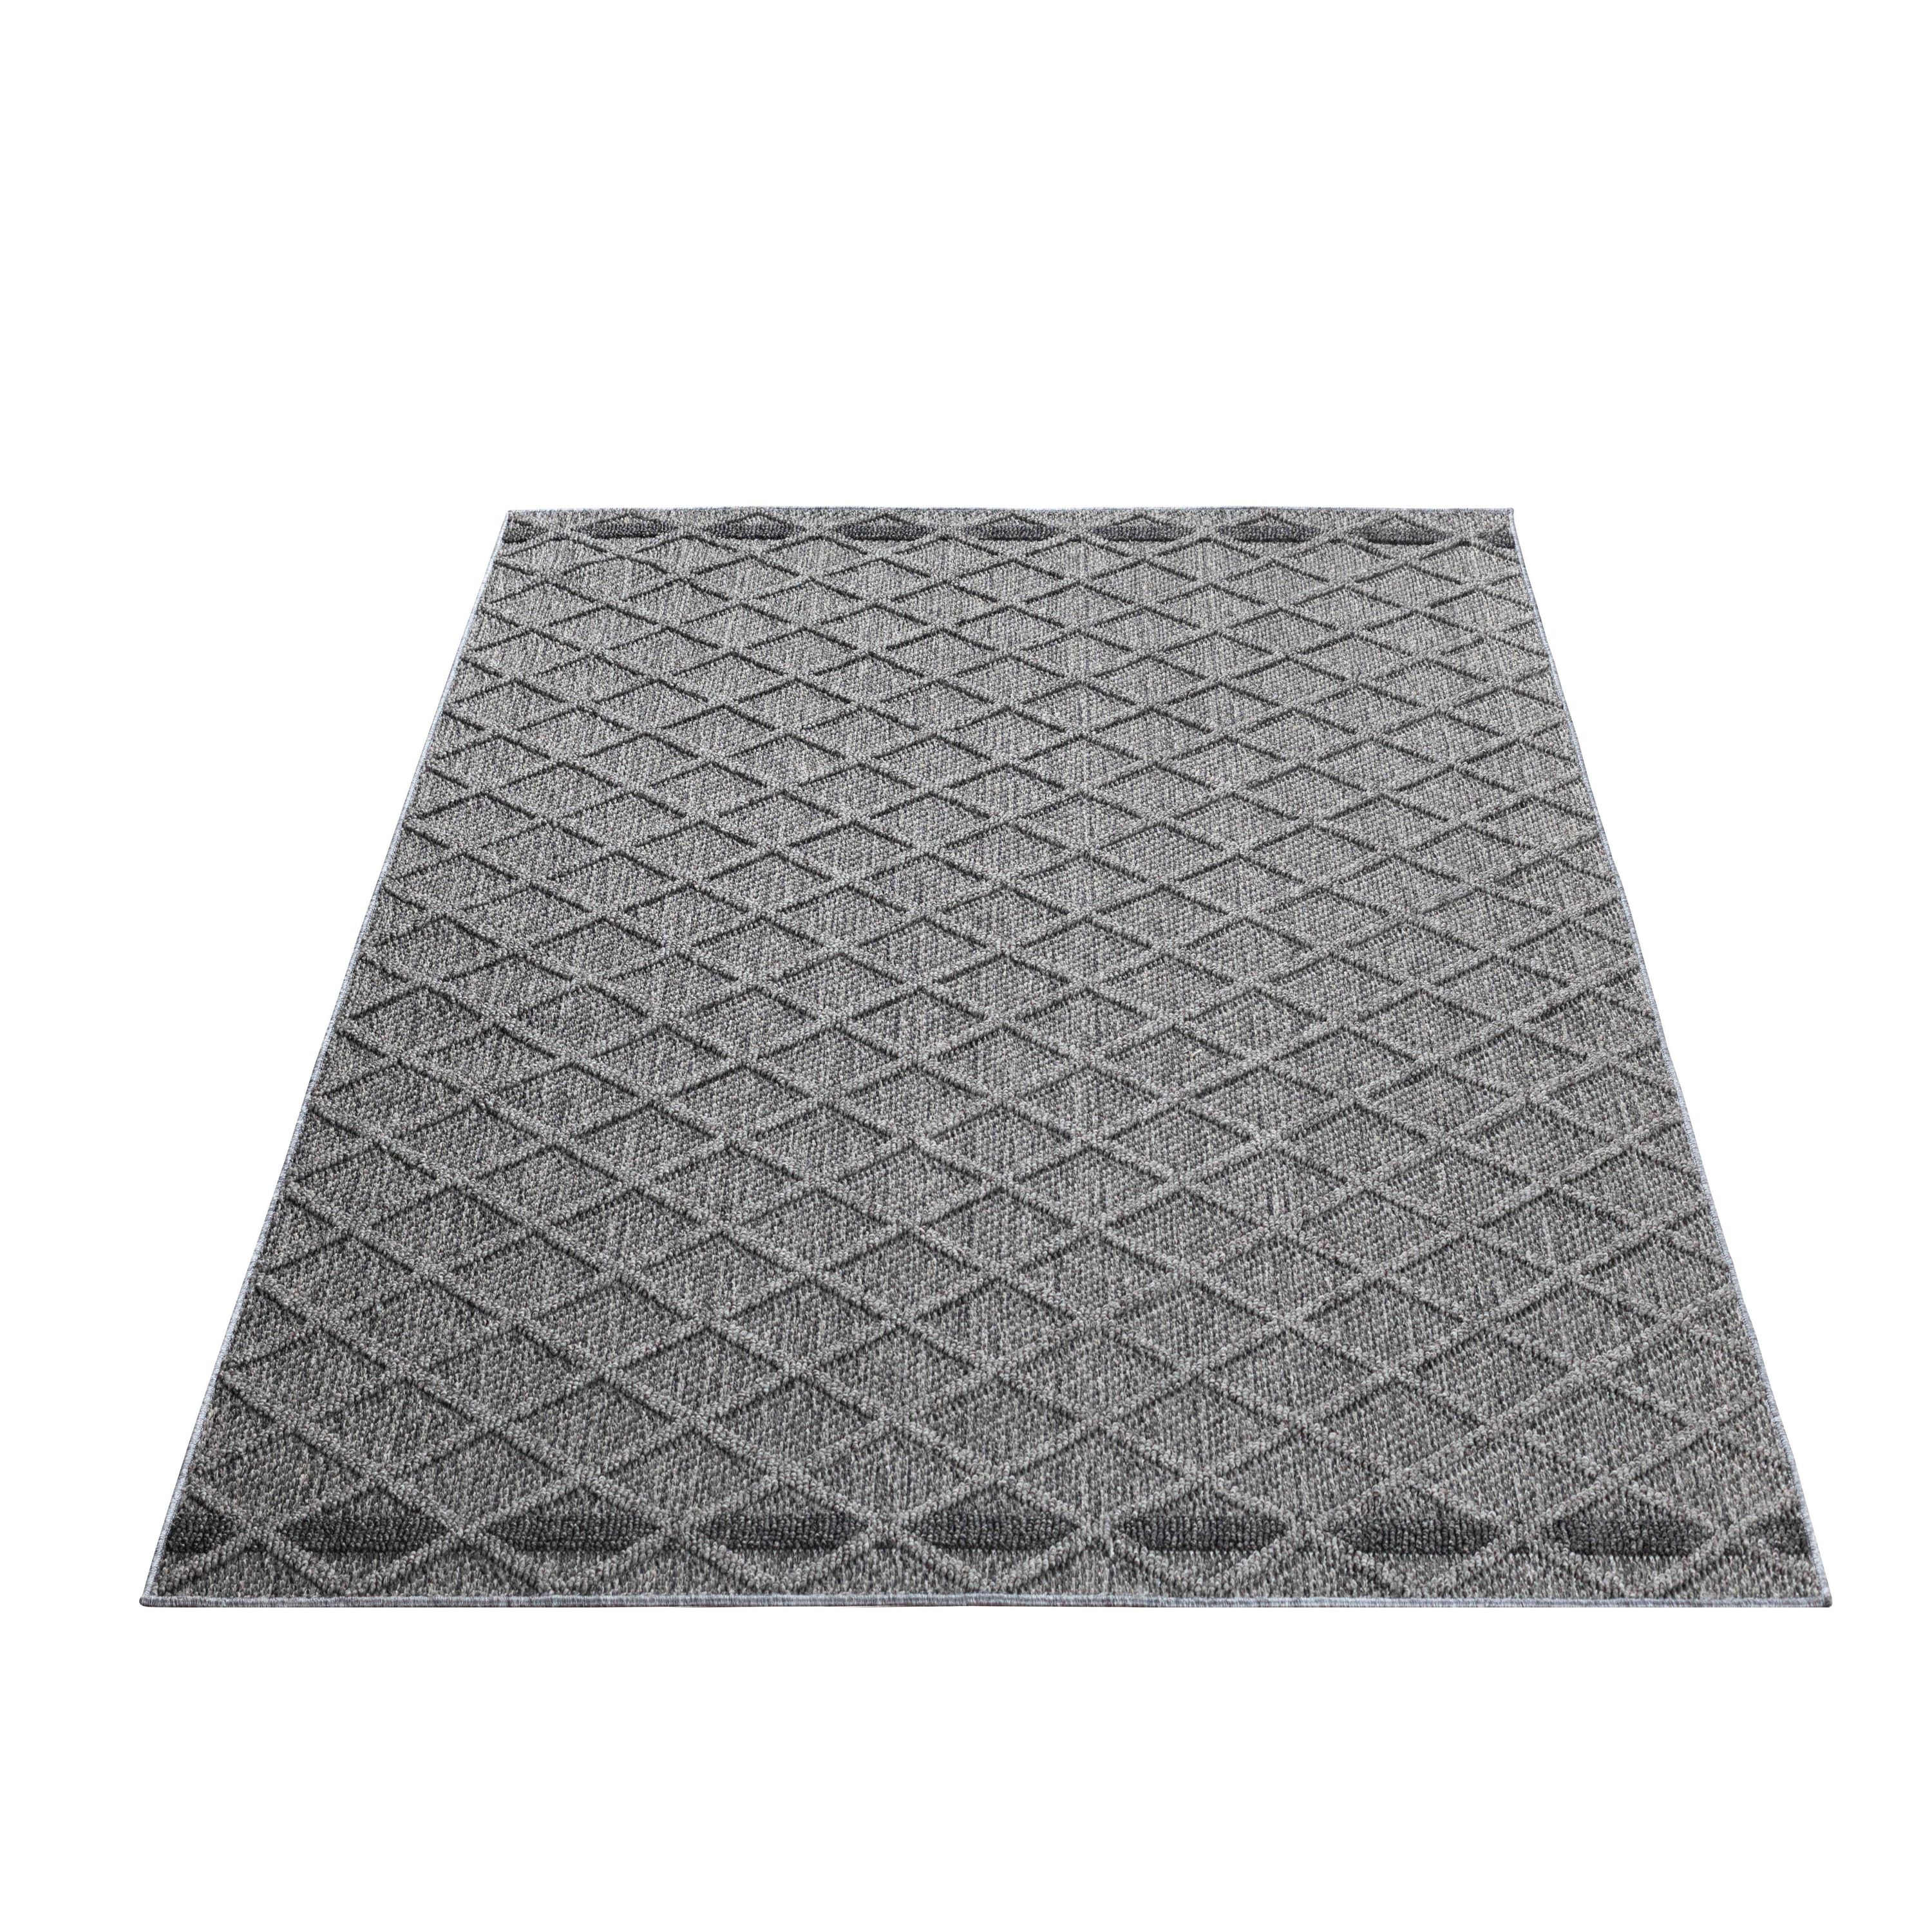 In- Outdoor Teppich Flachgewebt Sisal Optik Einfarbig 3D Skandi Design Grau